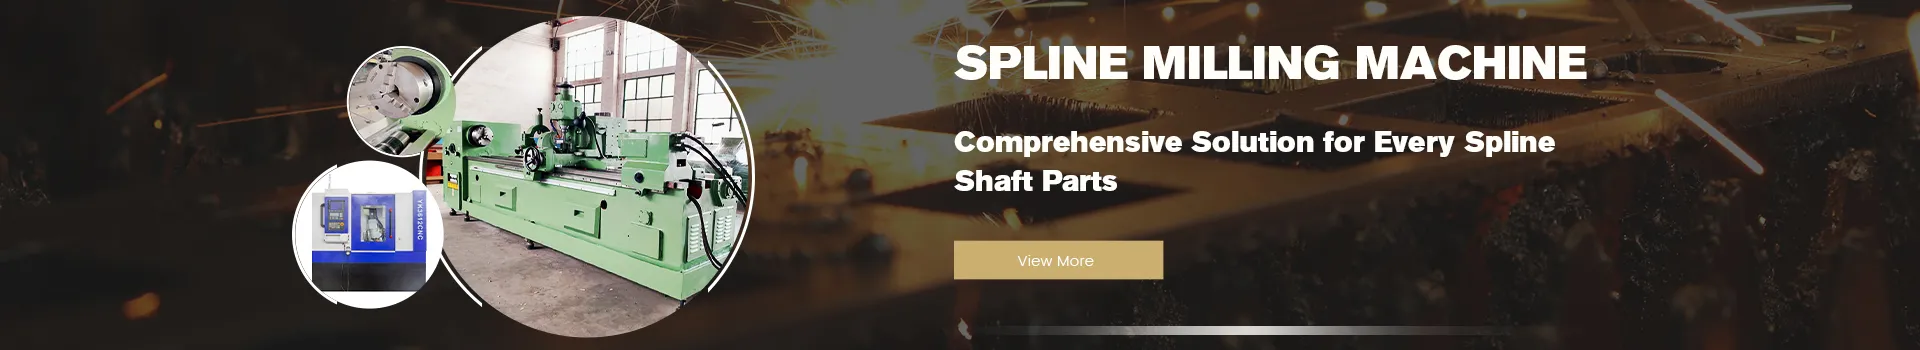 Spline Milling Machine